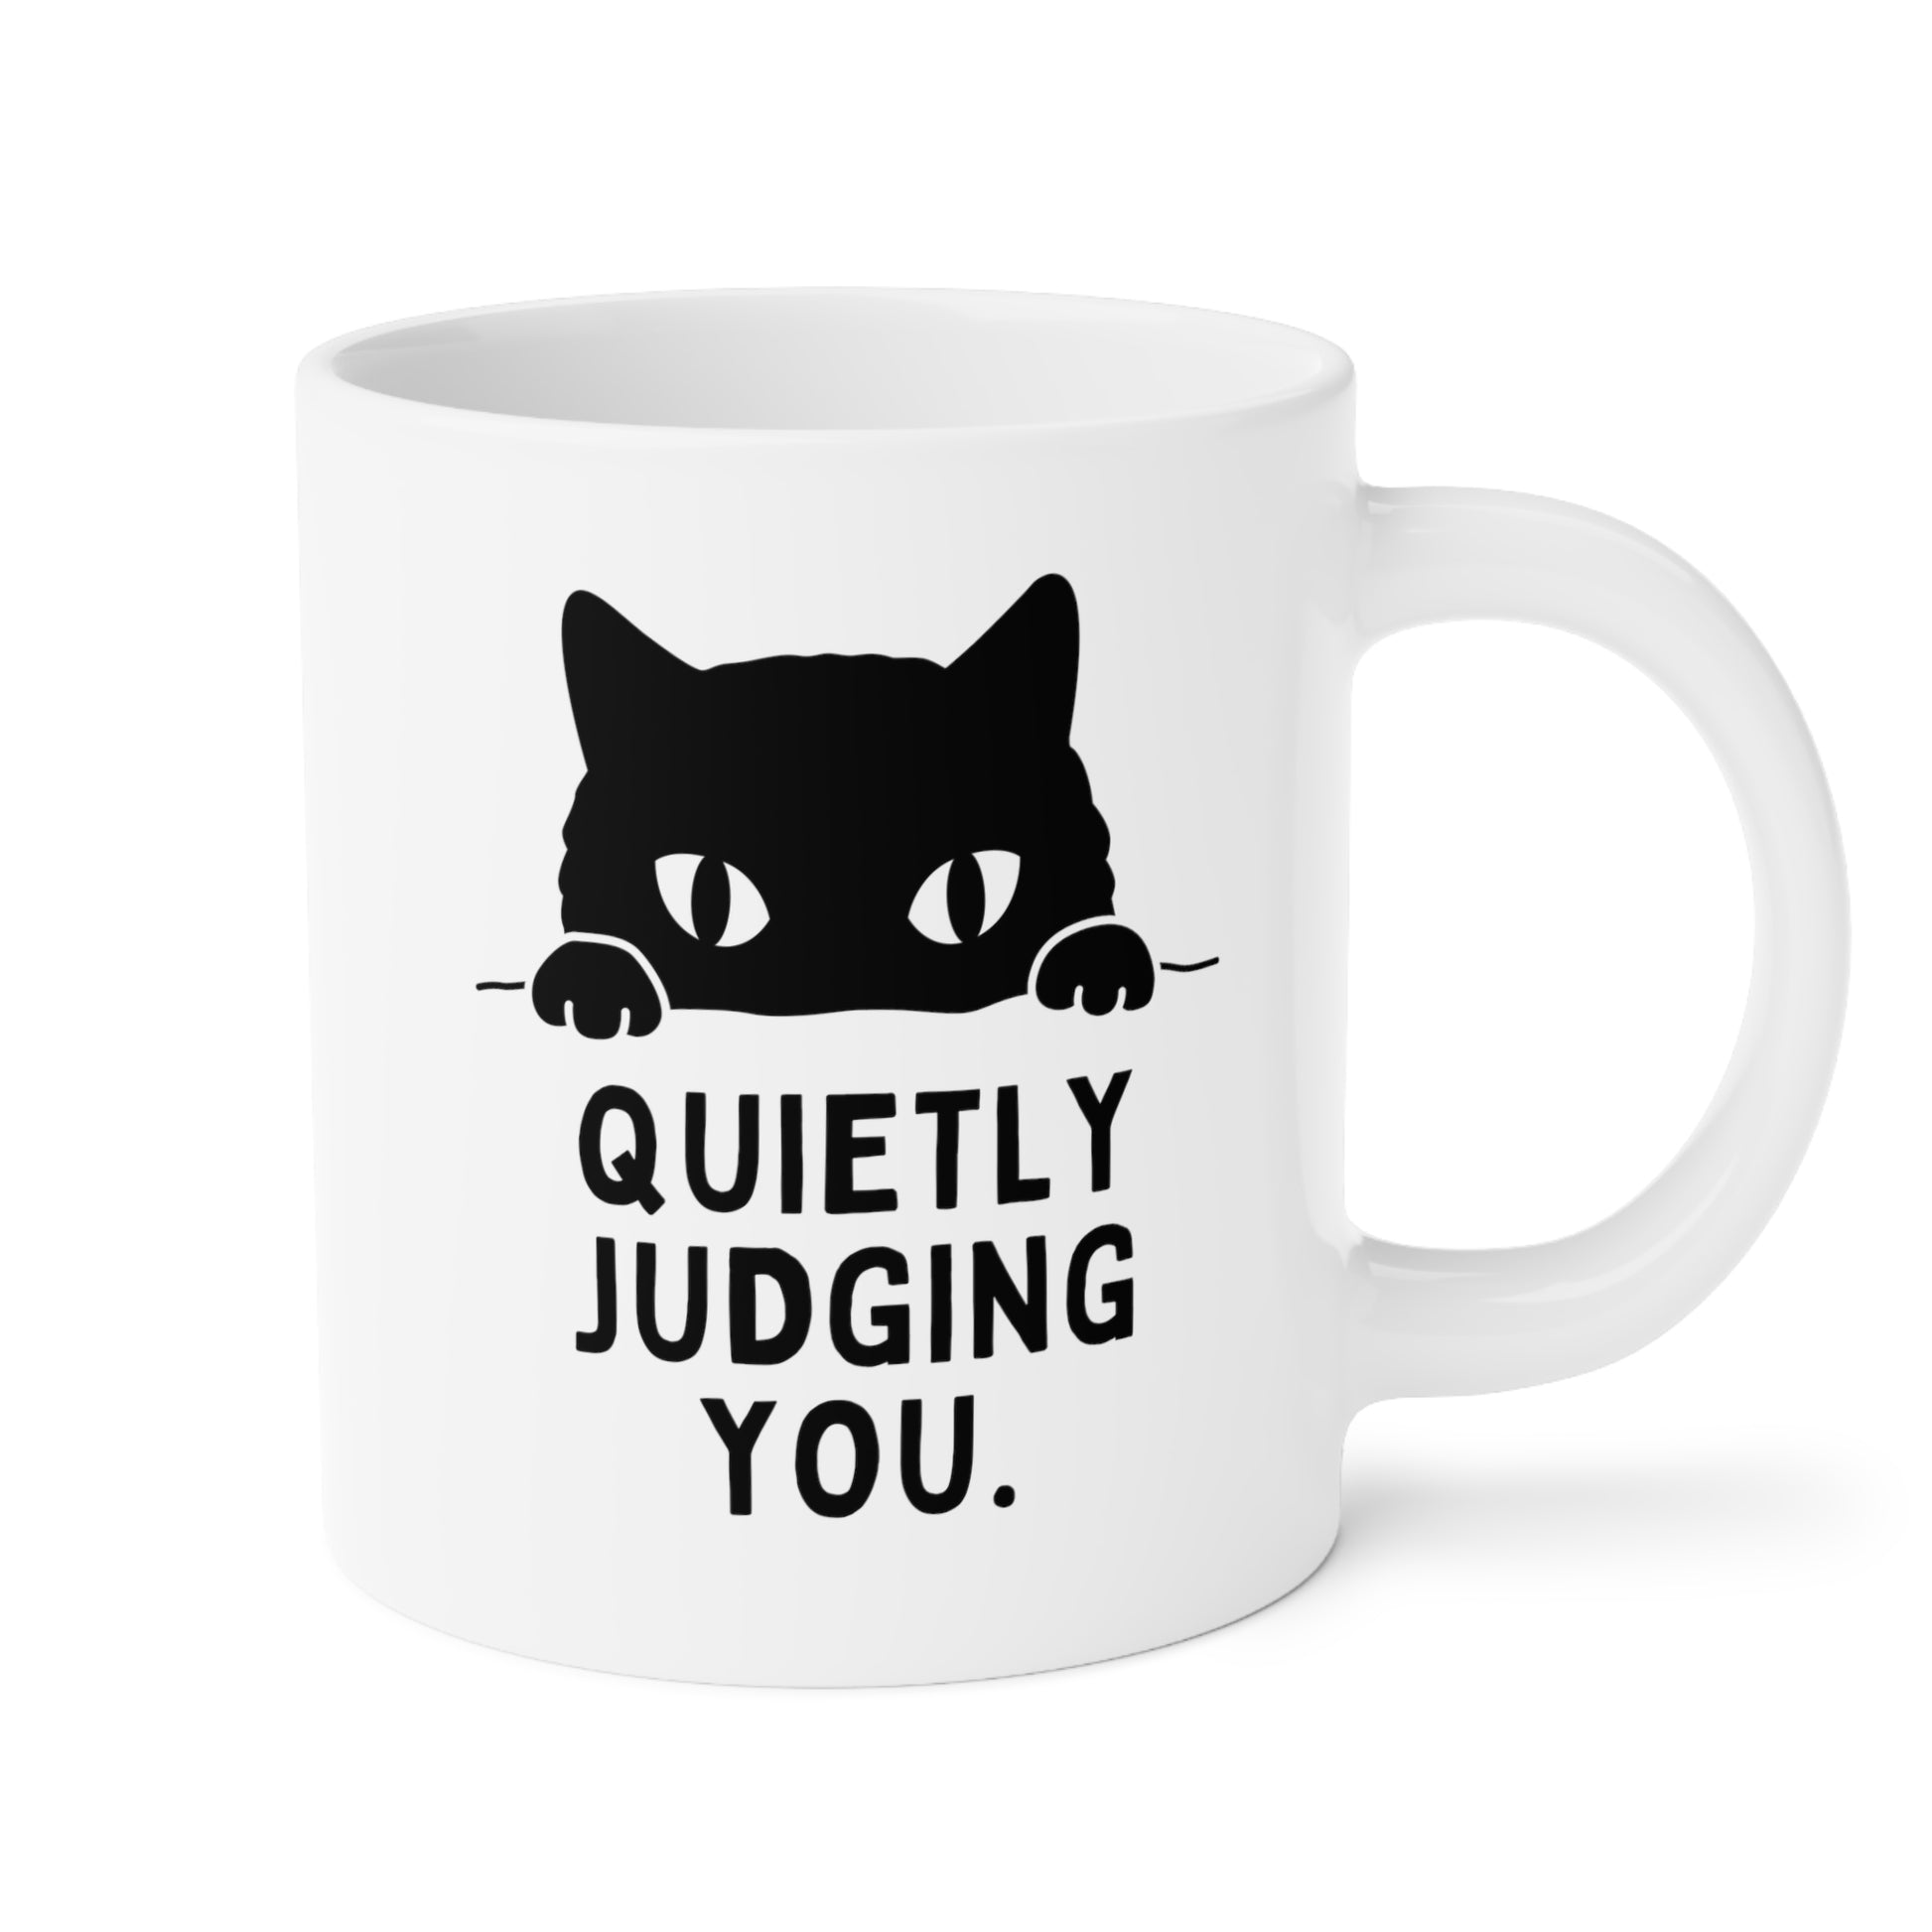 Quietly Judging You 20oz white funny large coffee mug gift for cat mom cute peeking sarcastic quote tea cup feline lover waveywares wavey wares wavywares wavy wares